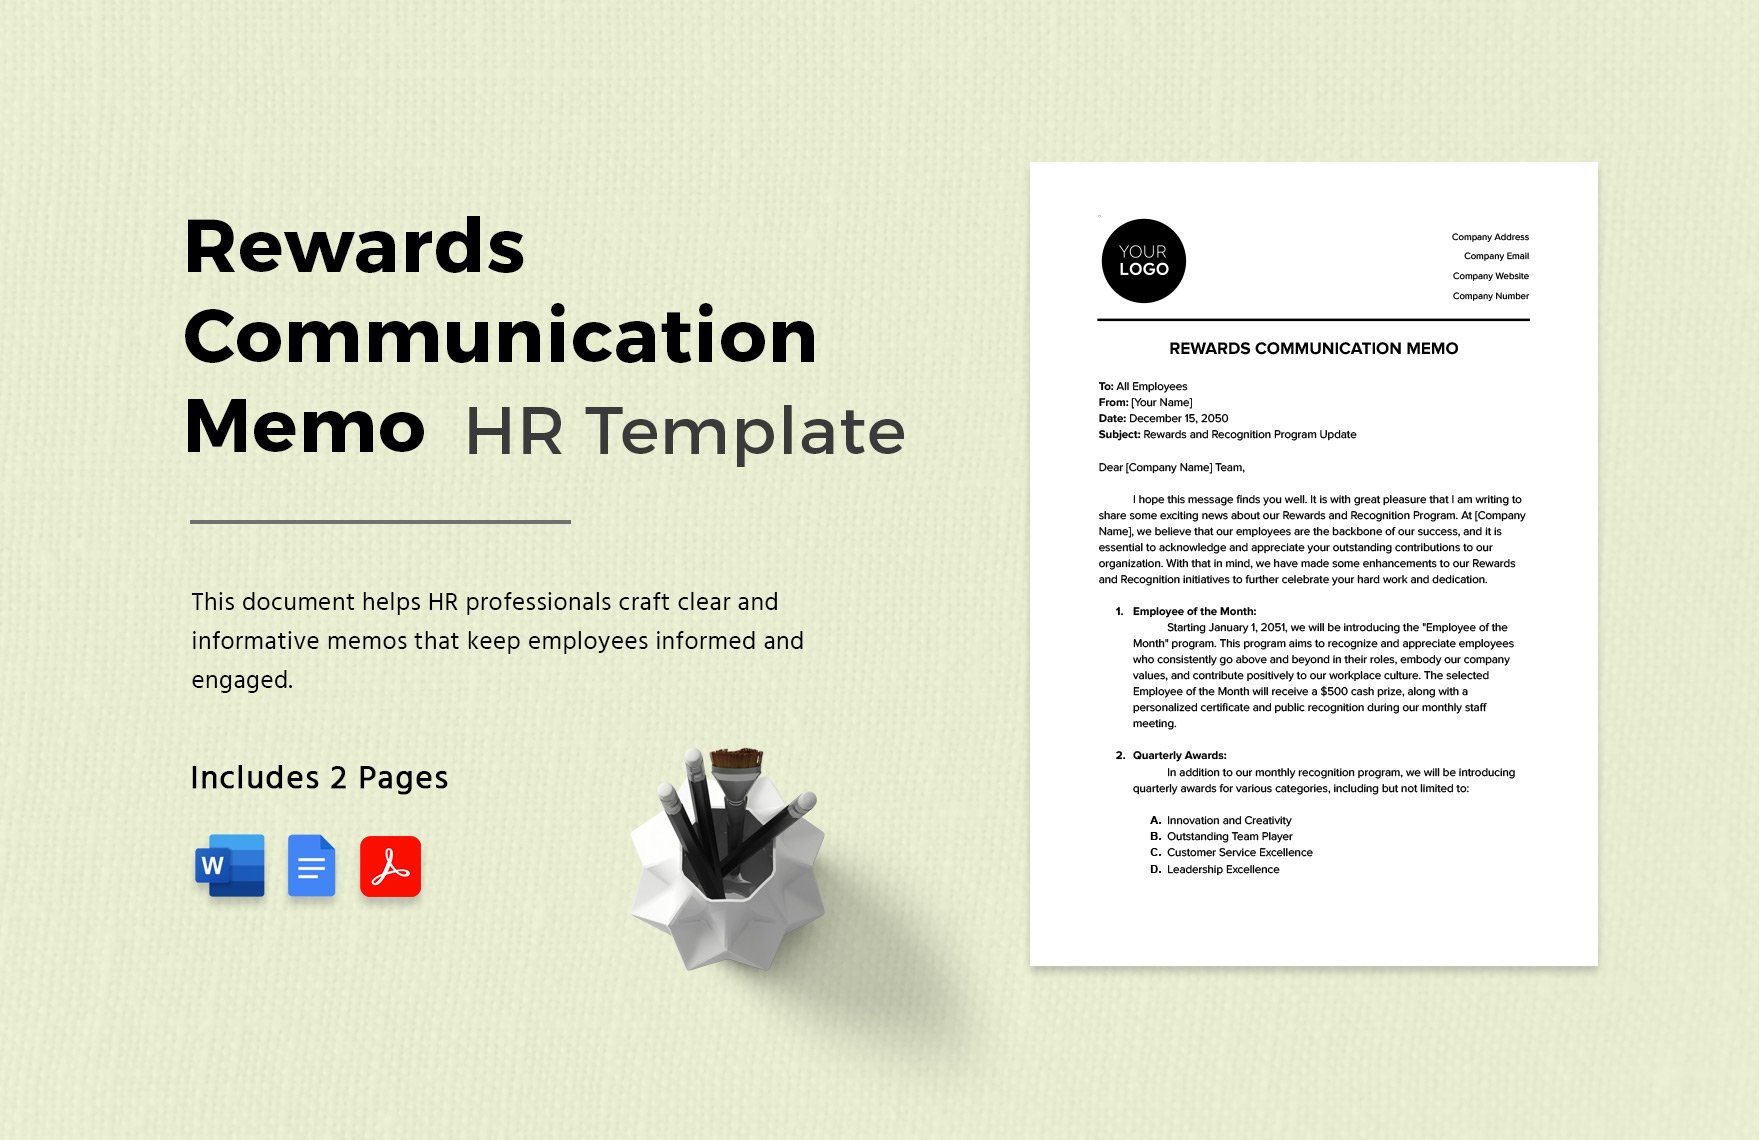 Rewards Communication Memo HR Template